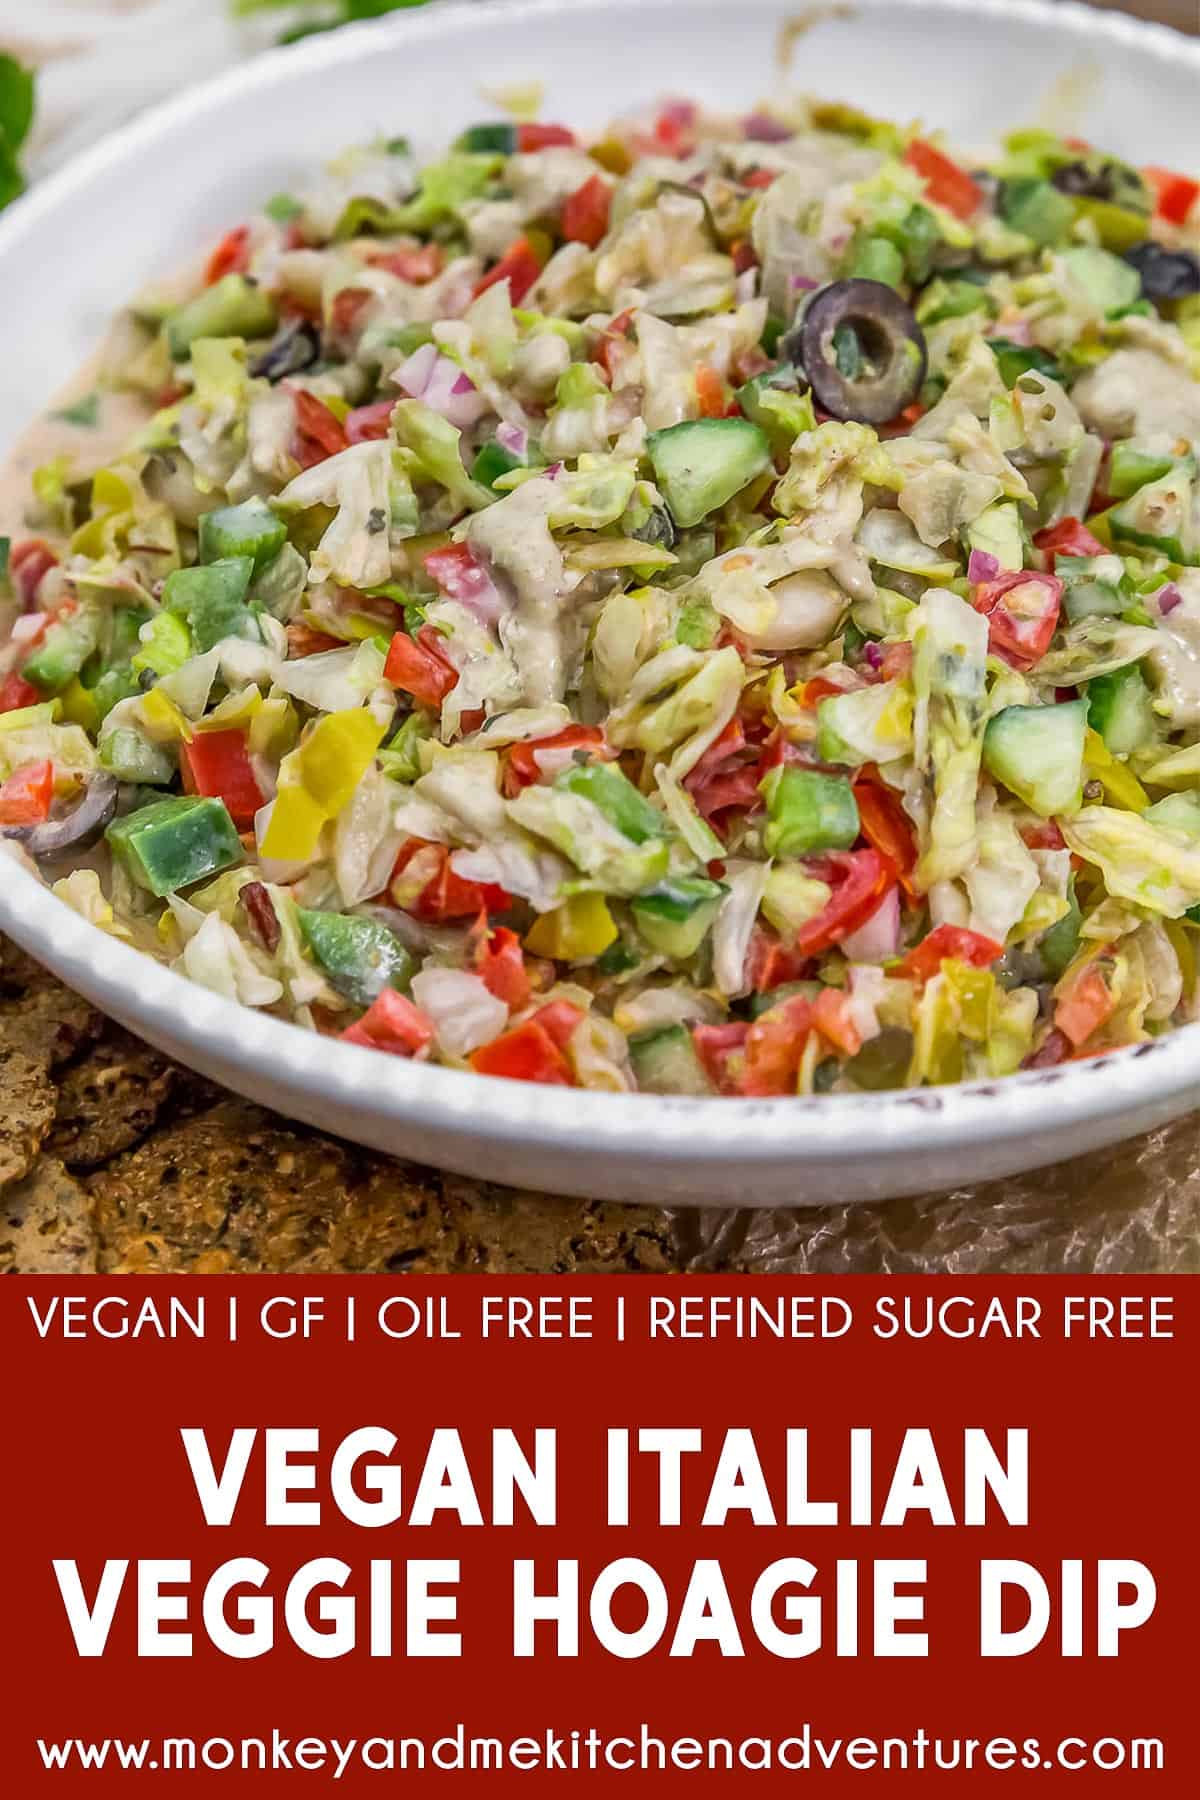 Vegan Italian Veggie Hoagie Dip with Text Description